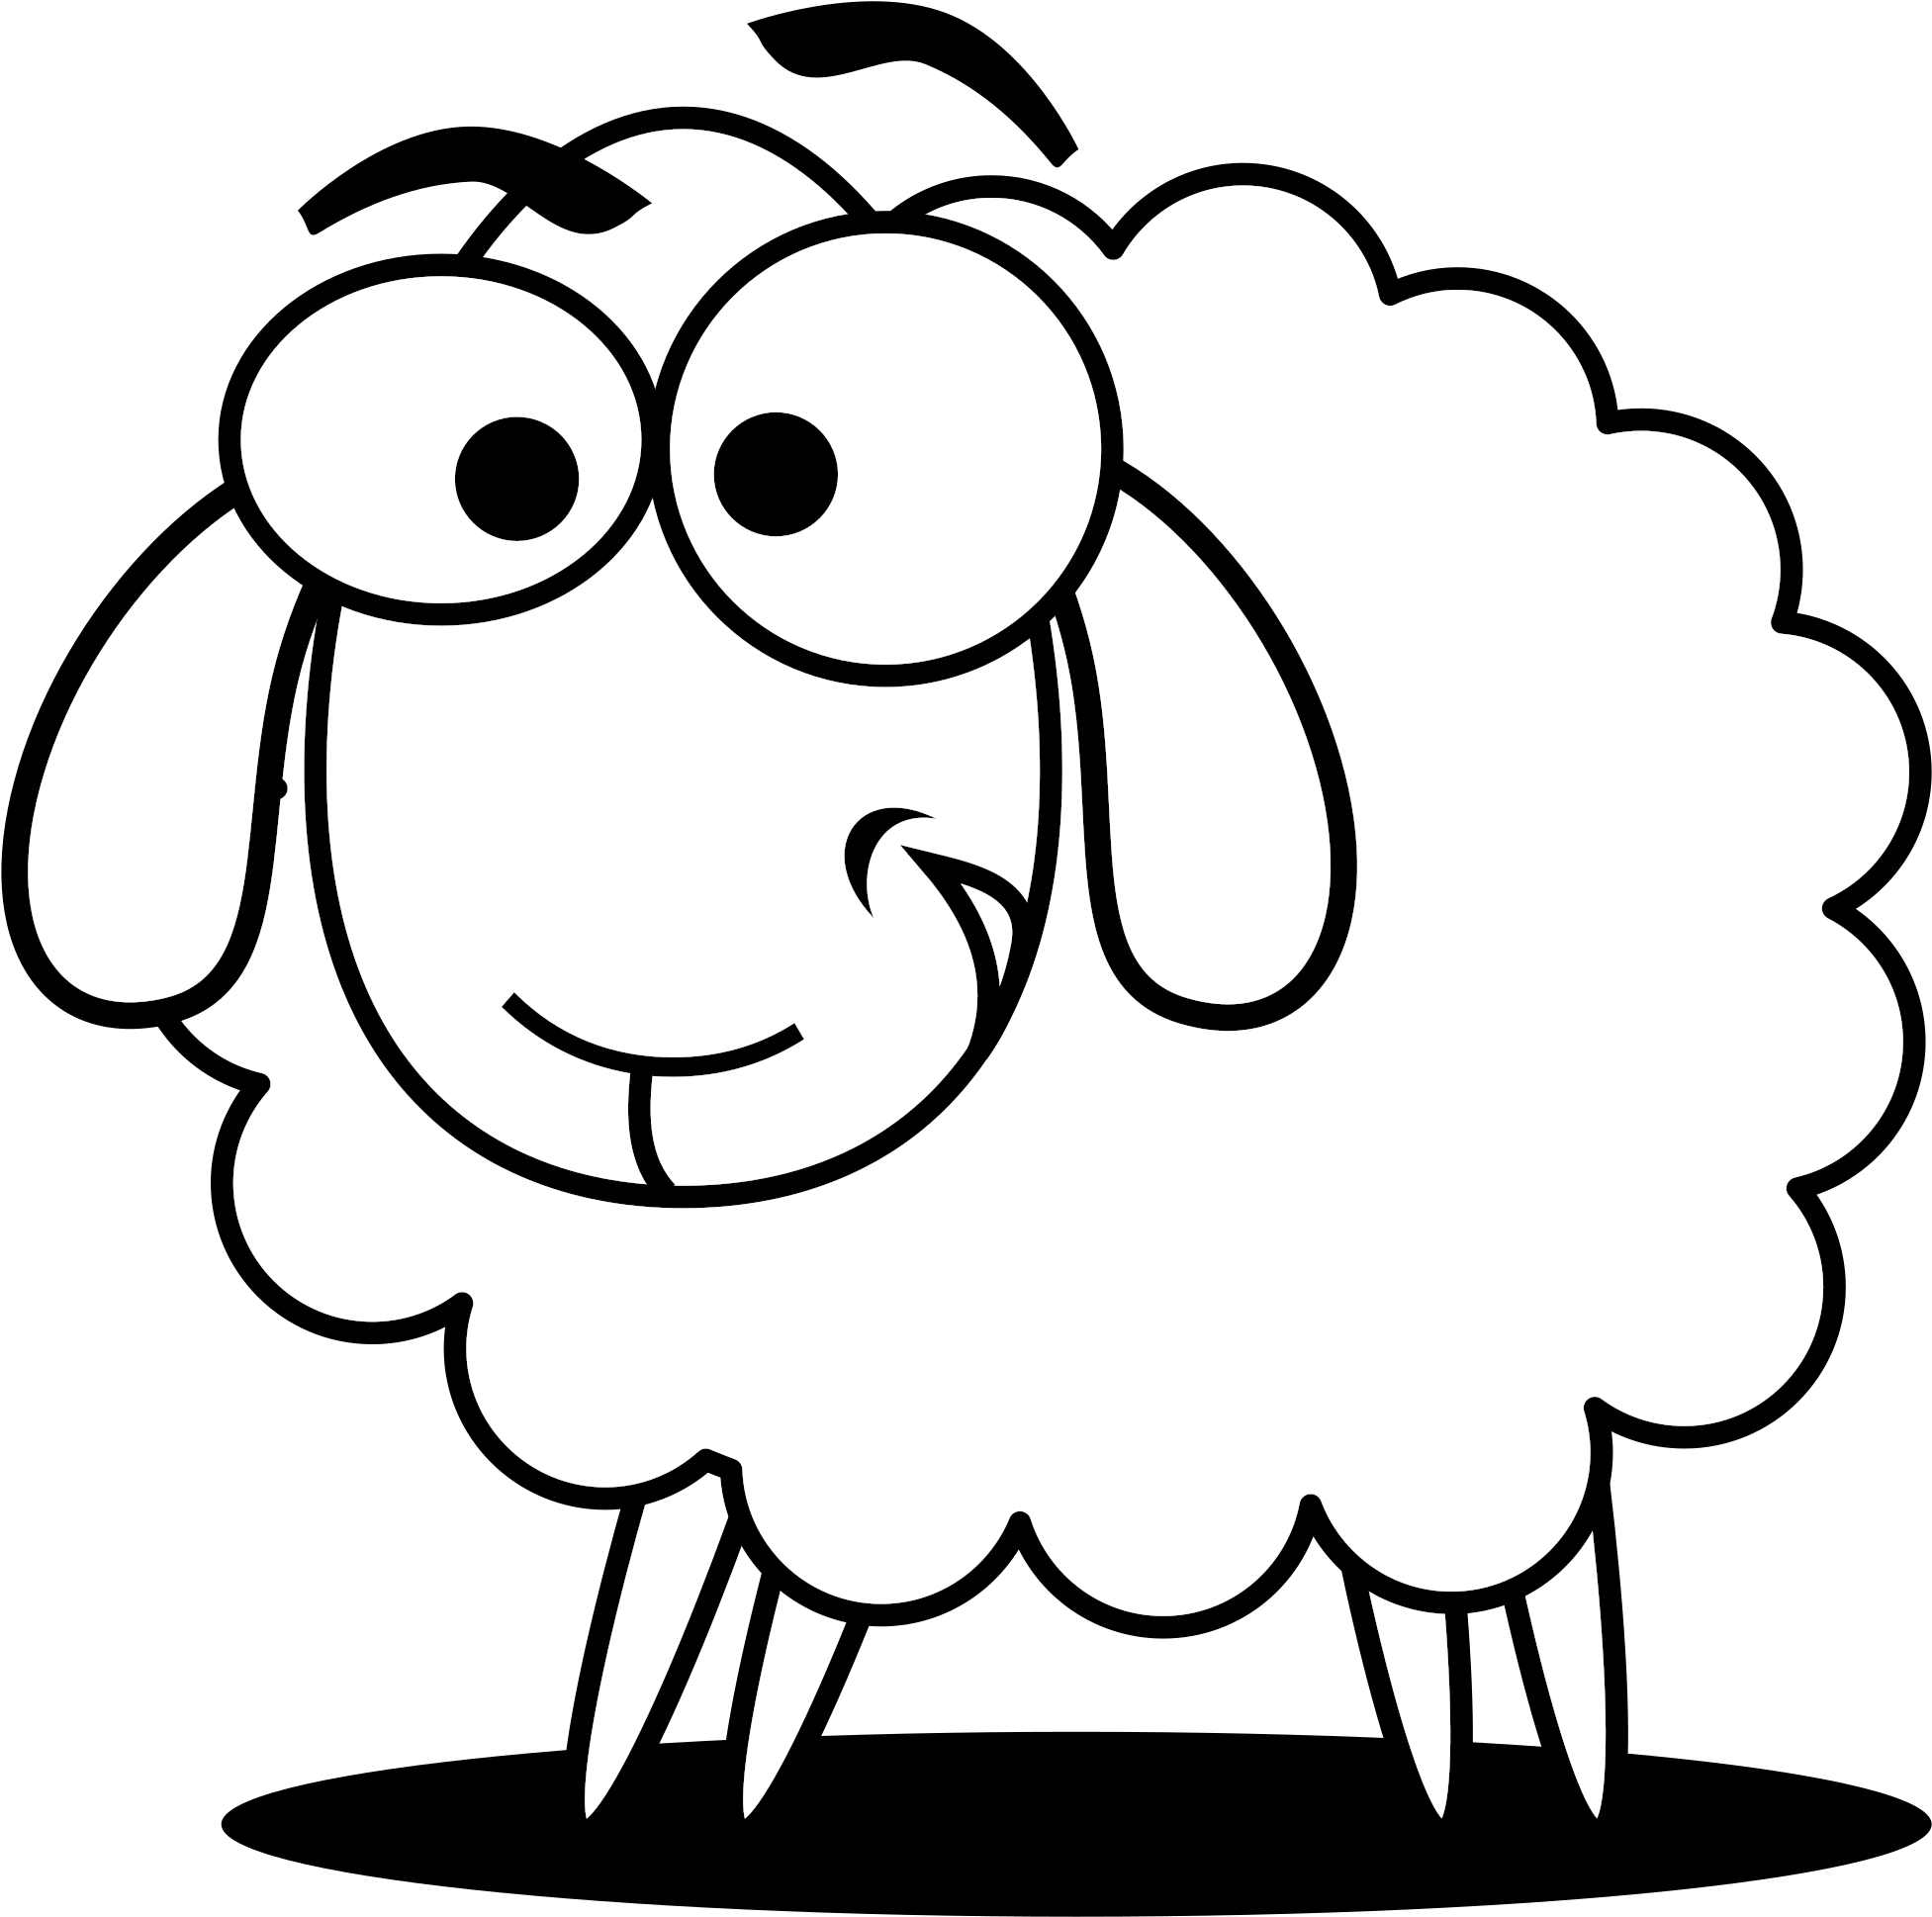 Sheep Clipart - Sheep Black And White.